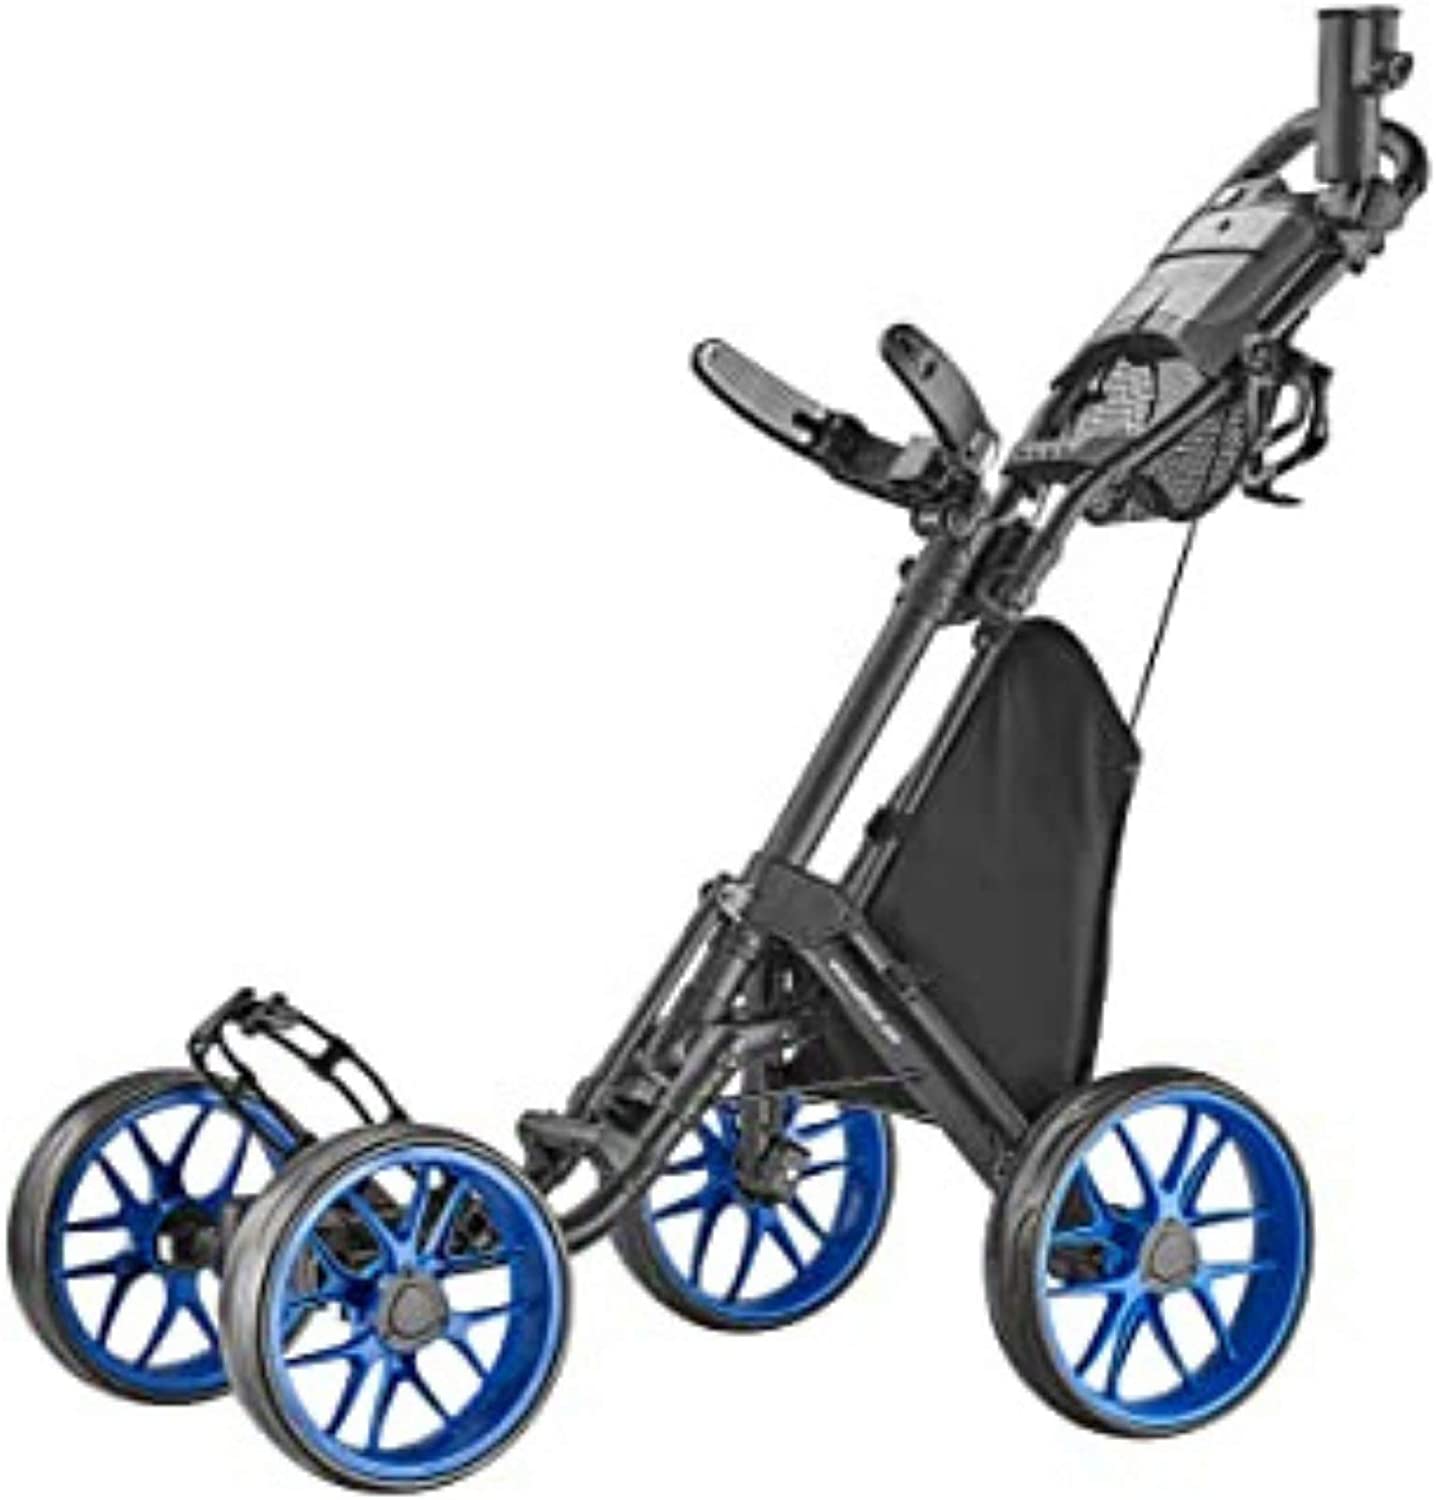 Caddytek 4 Wheel Golf Push Cart - Caddycruiser One Version 8